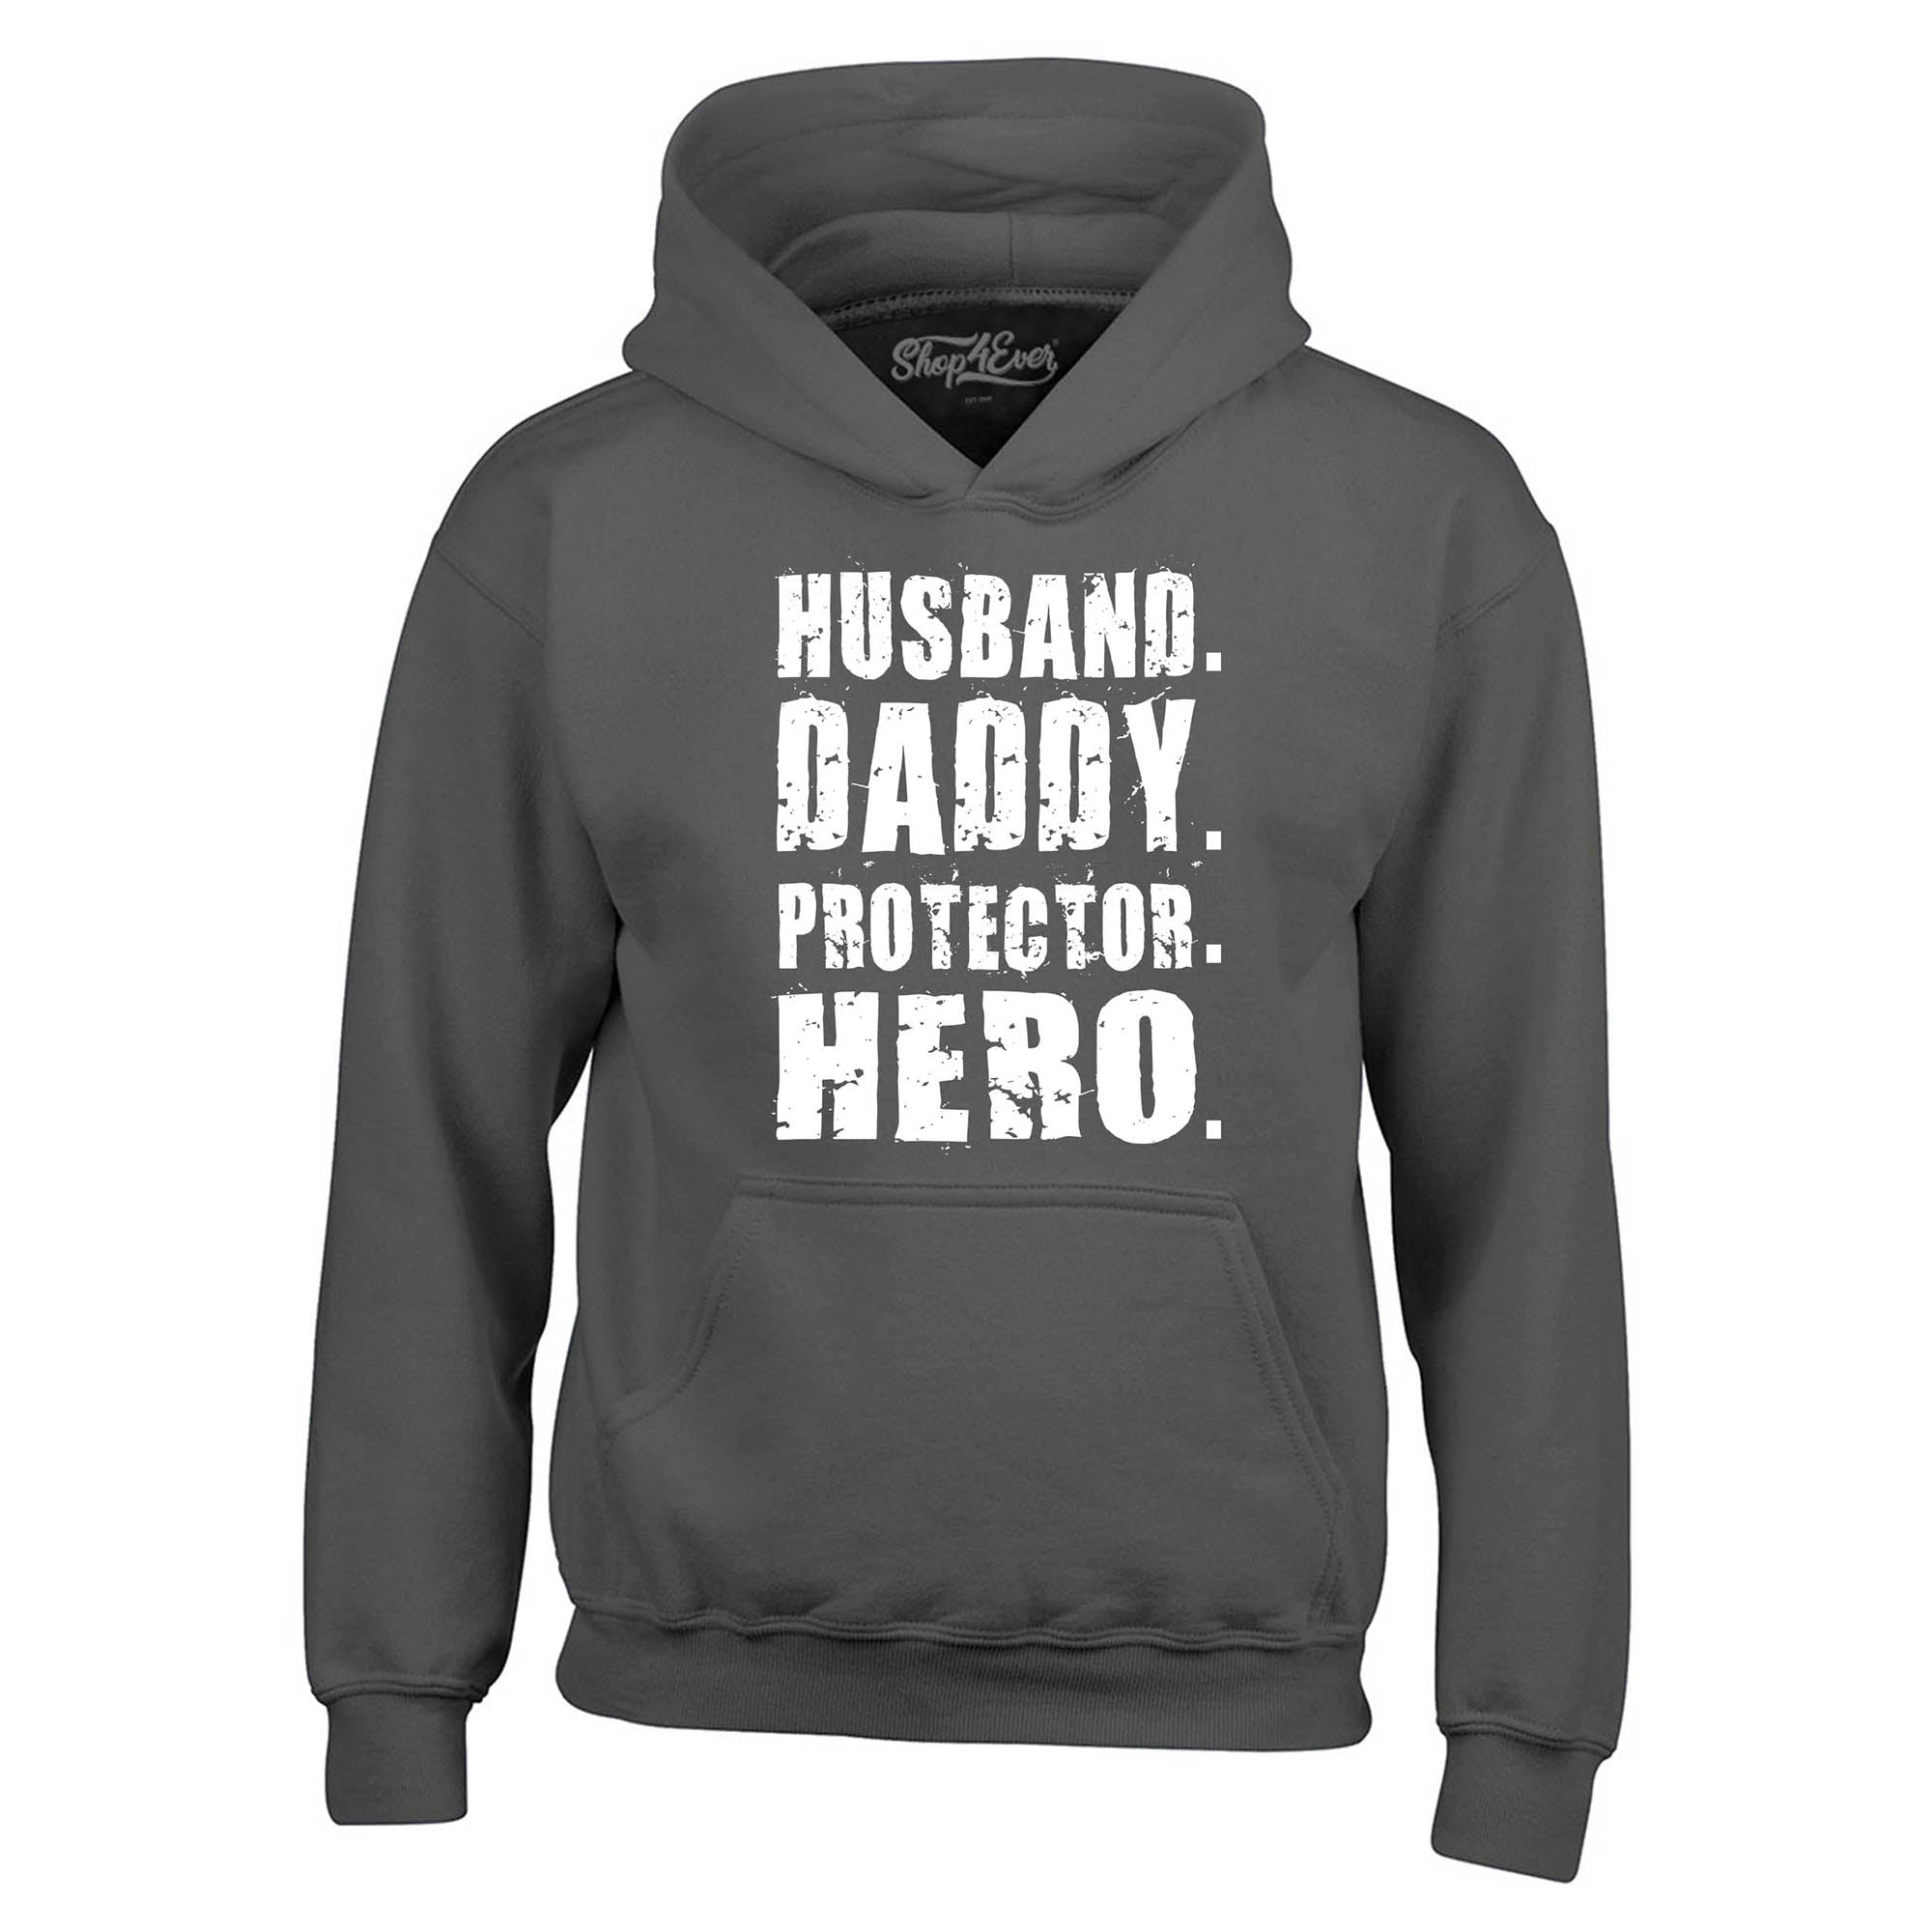 Husband. Daddy. Protector. Hero. Hoodie Sweatshirts